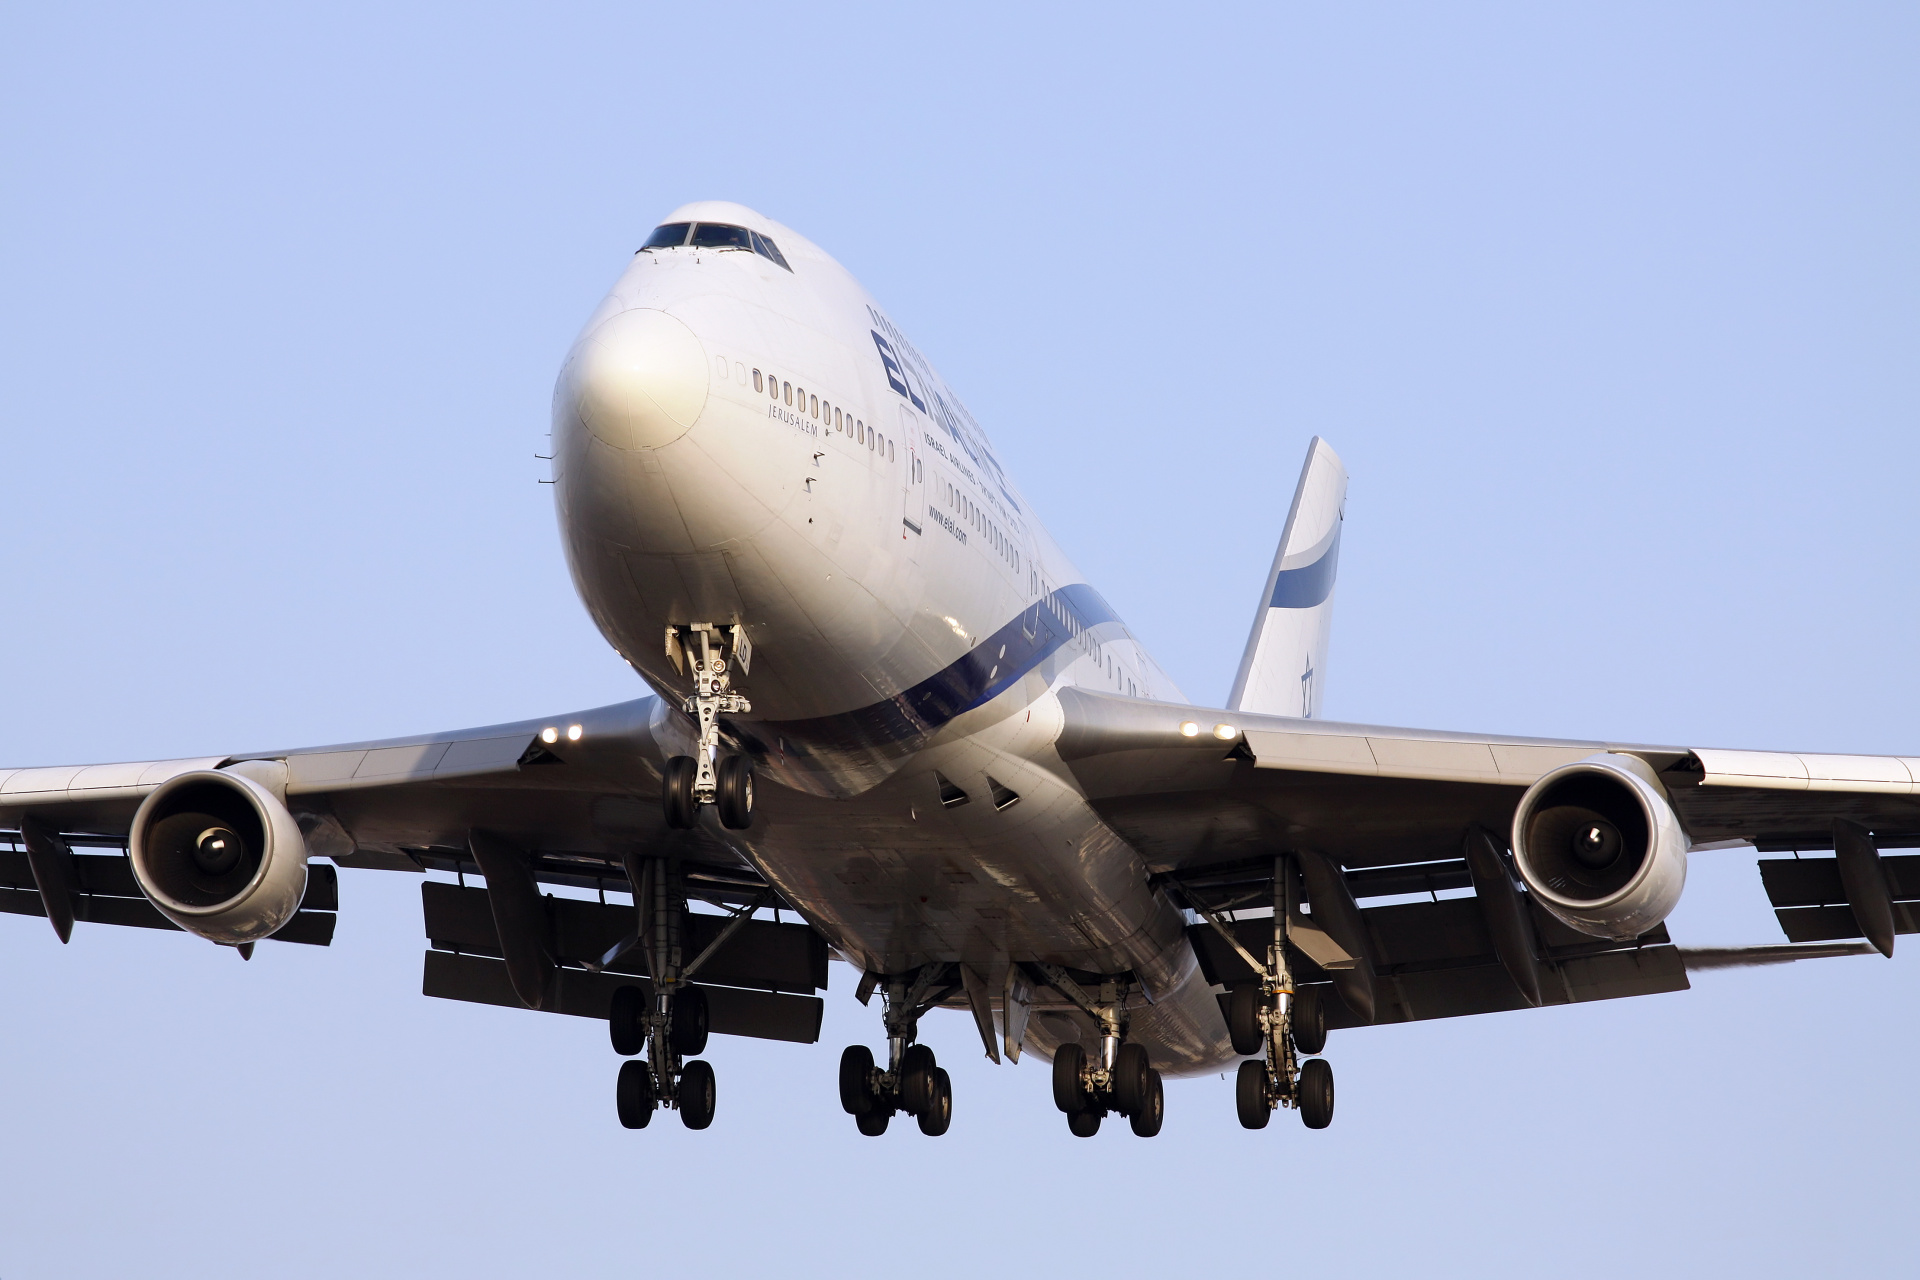 4X-ELD (Aircraft » EPWA Spotting » Boeing 747-400 » El Al Israel Airlines)